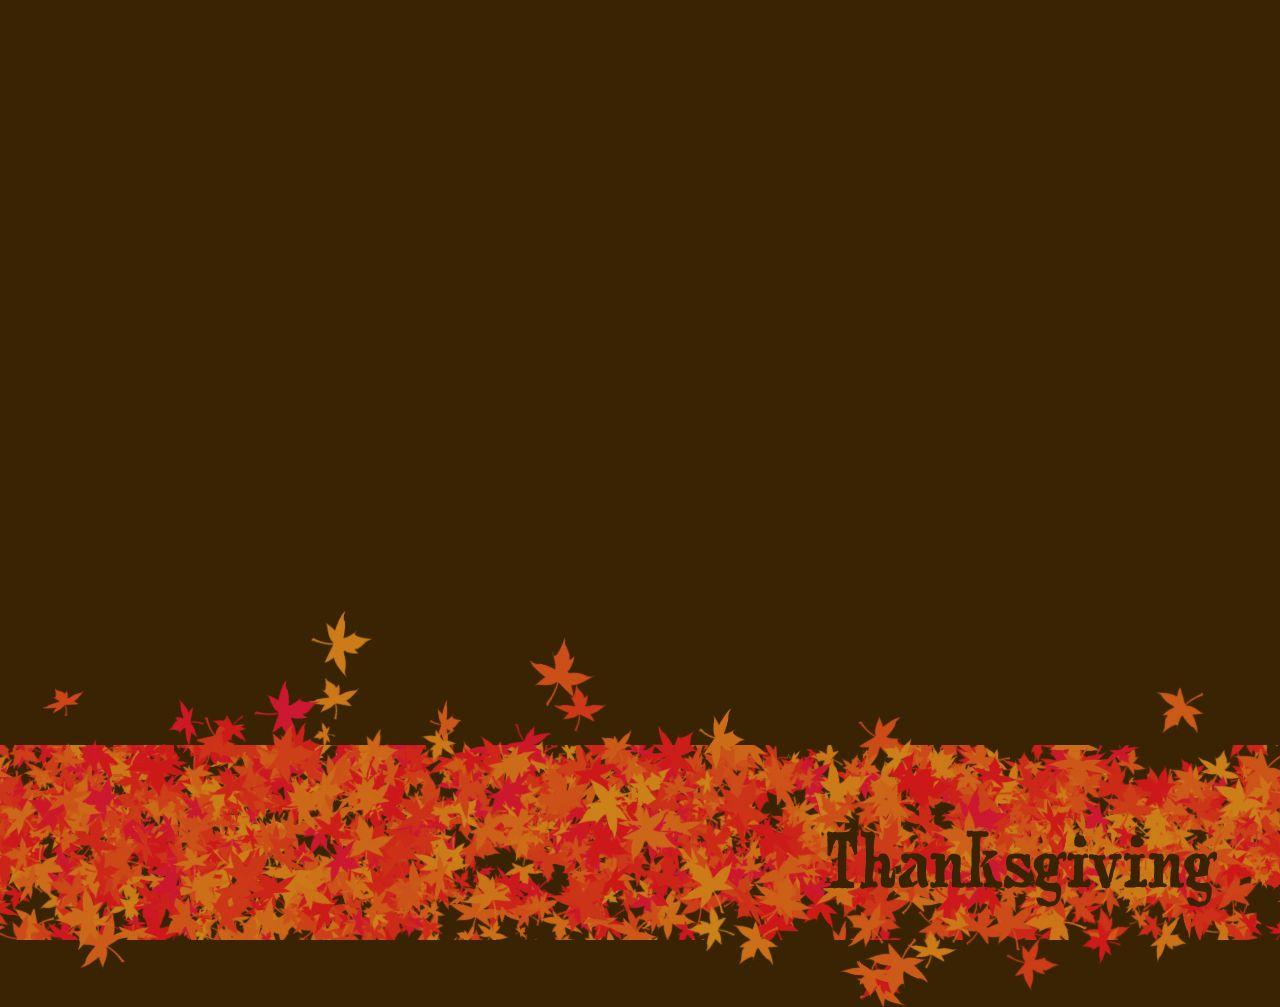 Thanksgivings Day Smartphone Wallpaper. My Smartphone Tutor